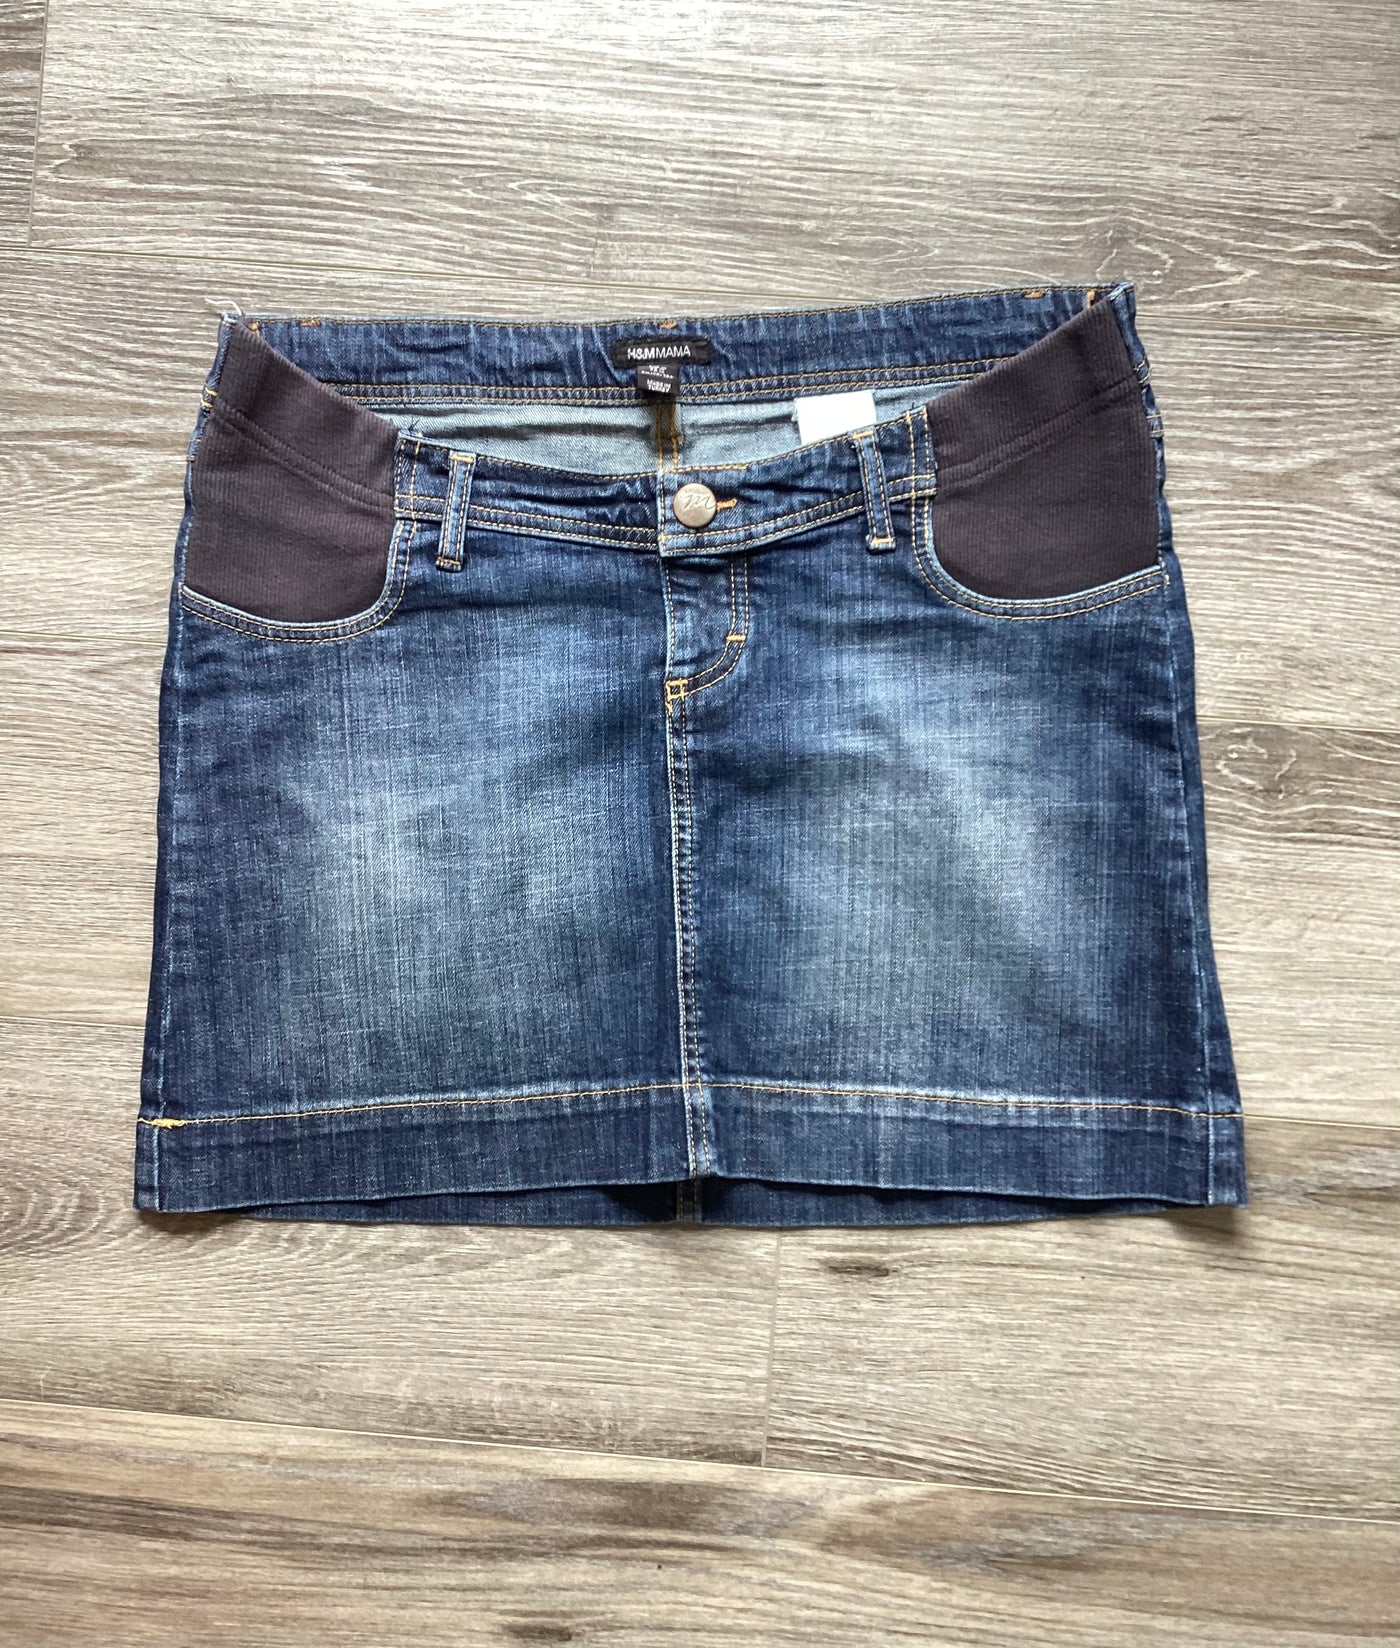 H&M Mama blue underbump denim skirt - Size M (Approx UK 10/12)